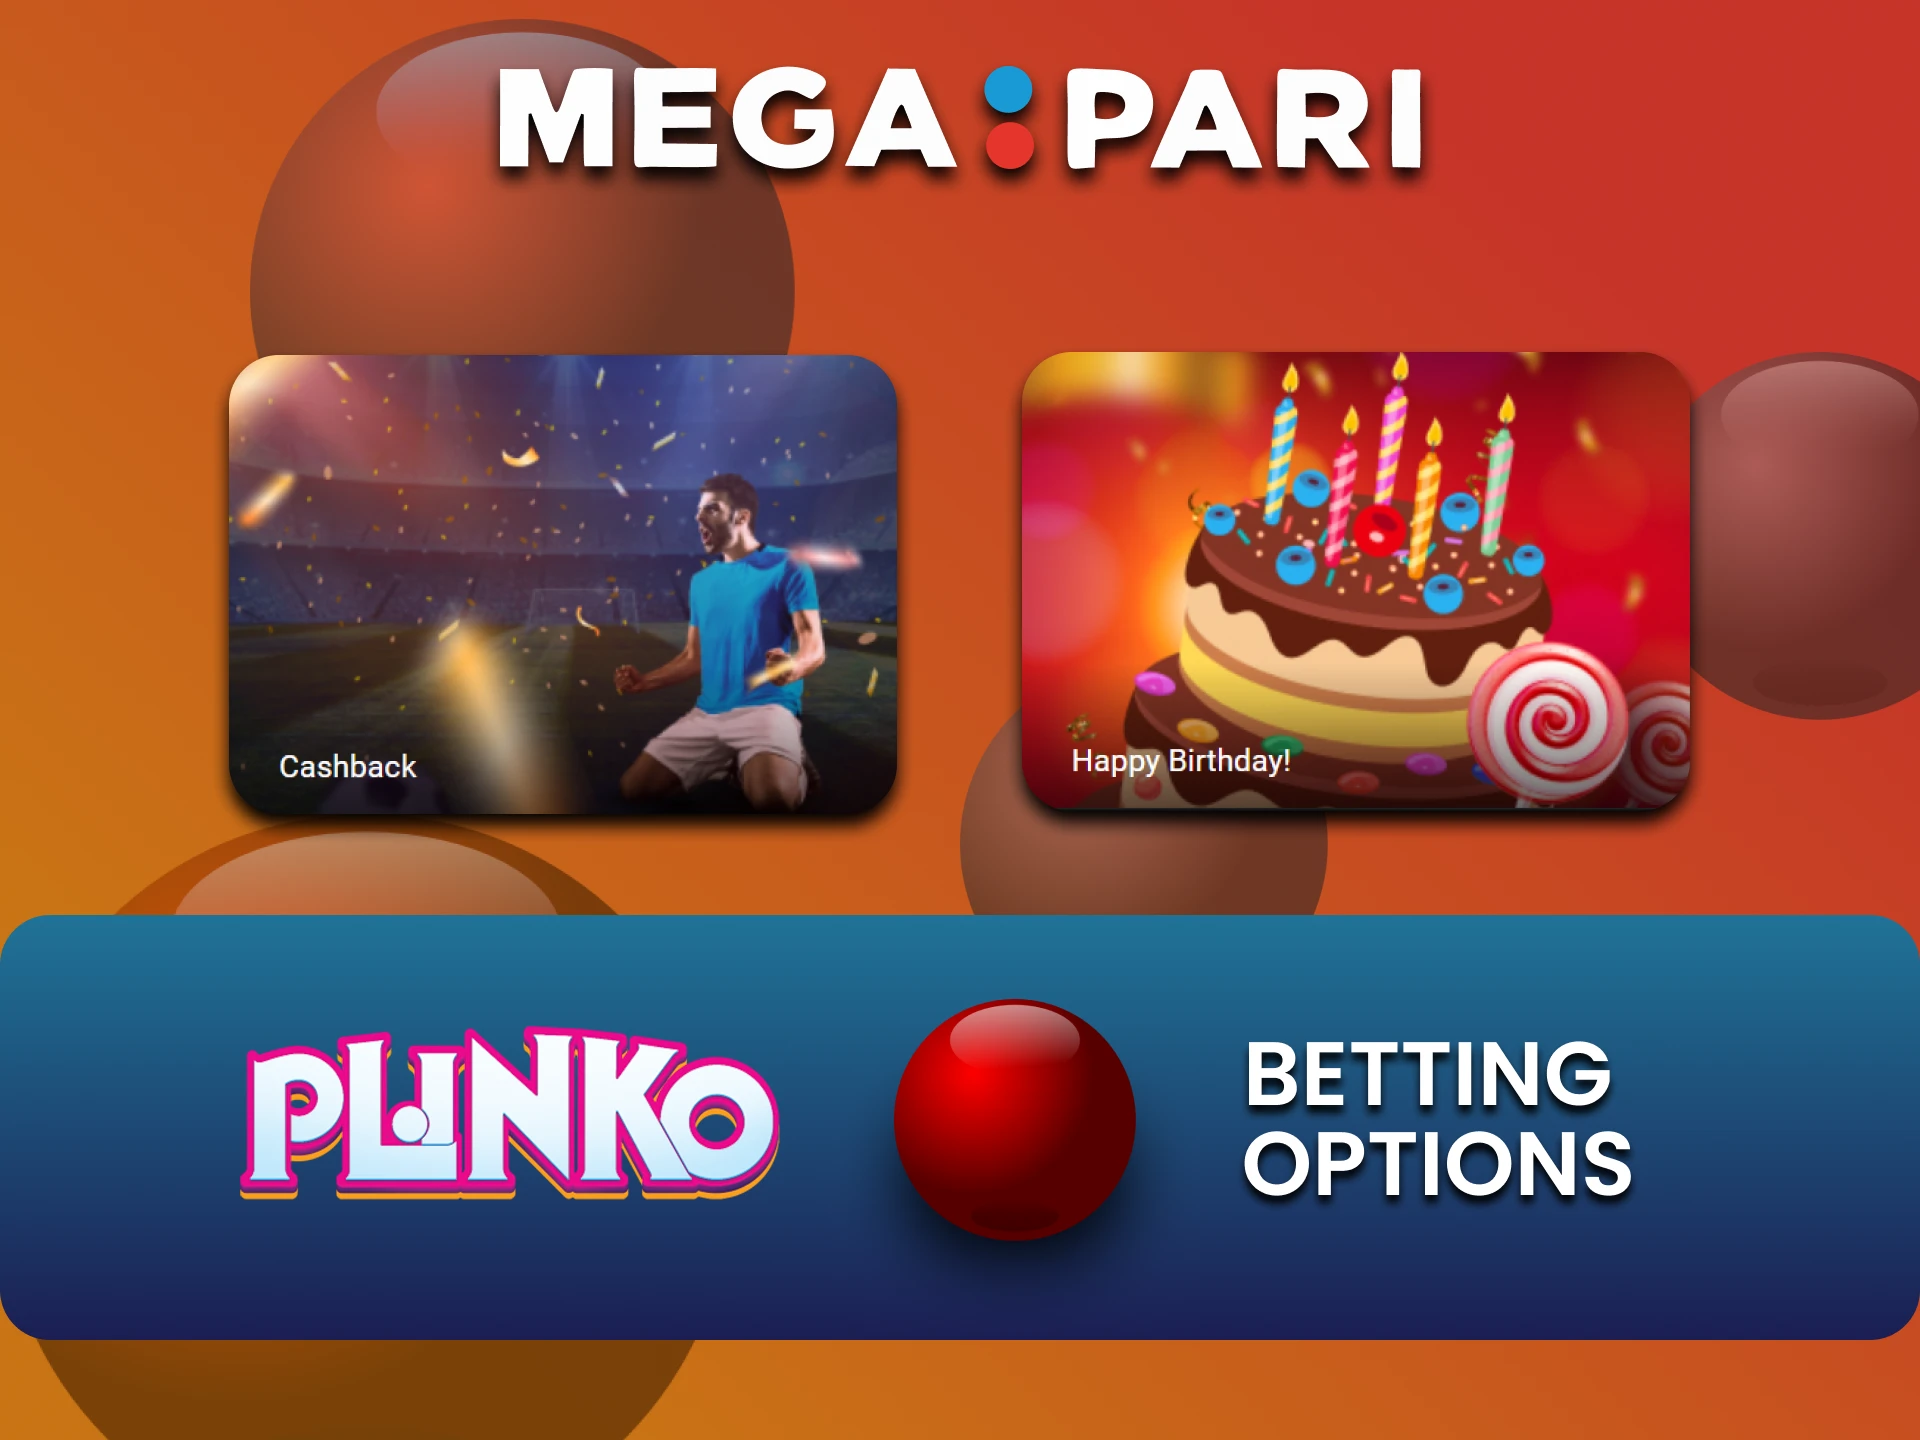 Get a bonus for playing Plinko from Megapari.